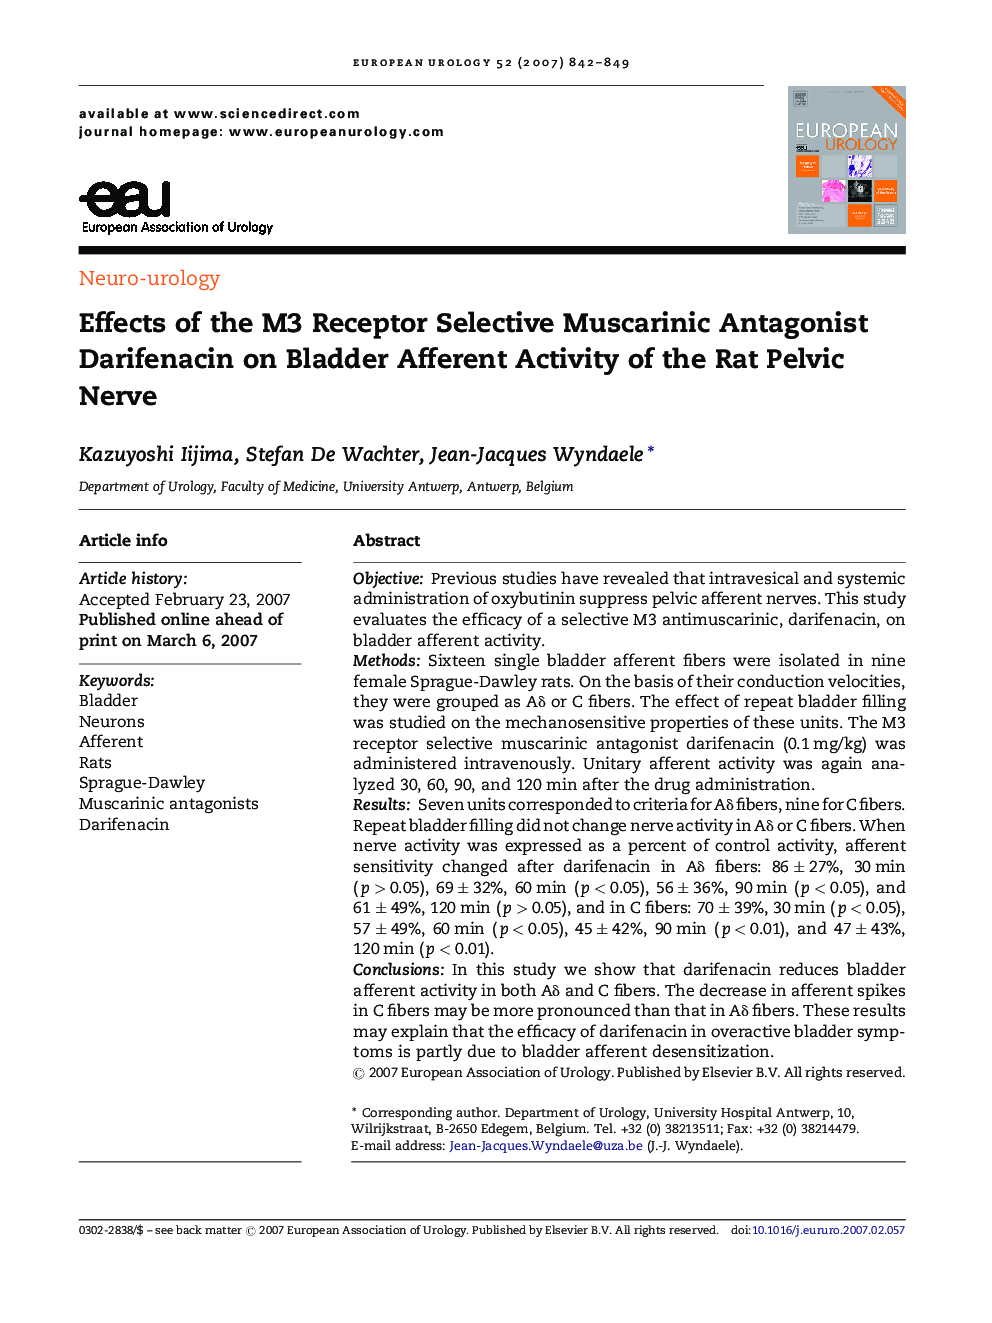 Effects of the M3 Receptor Selective Muscarinic Antagonist Darifenacin on Bladder Afferent Activity of the Rat Pelvic Nerve